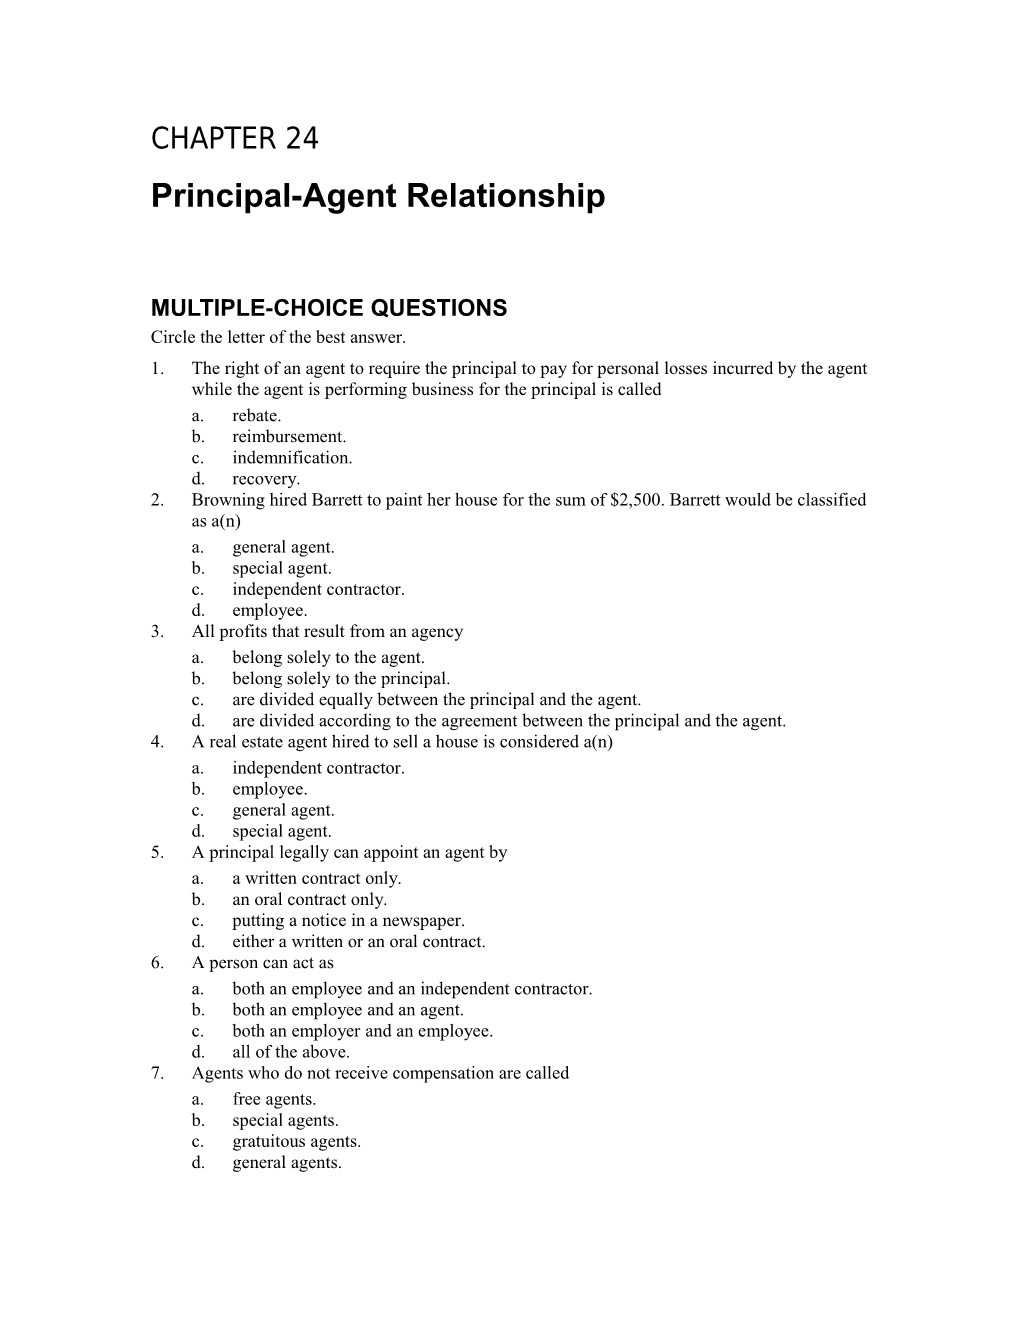 Principal-Agent Relationship